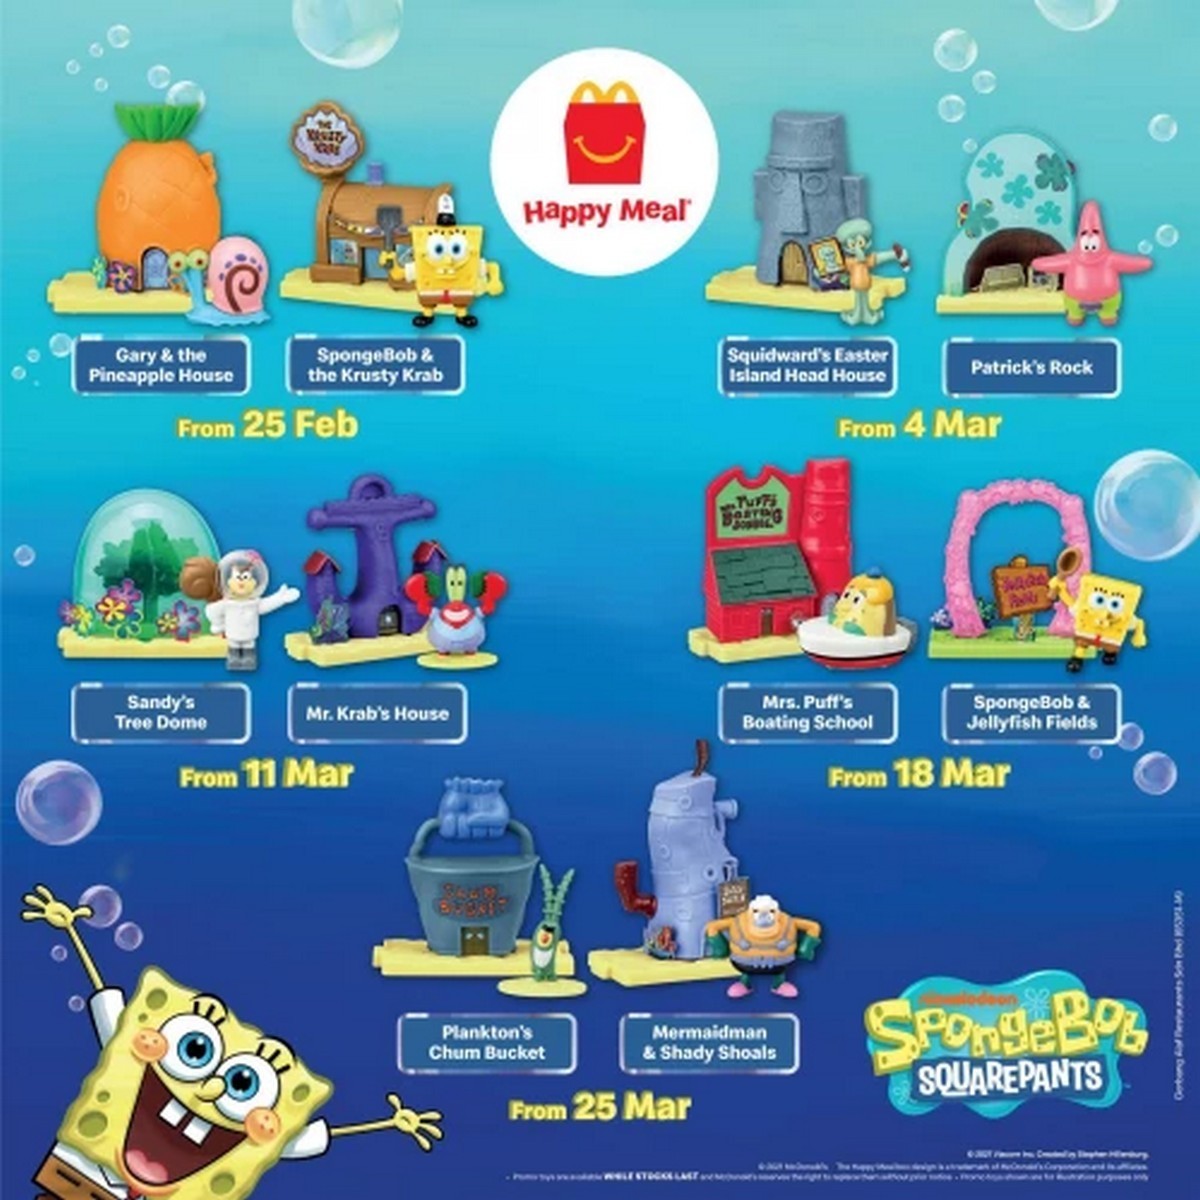 Patrick's Rock Toy McDonald's McDonalds Happy meal 2021 Spongebob Squarepants 